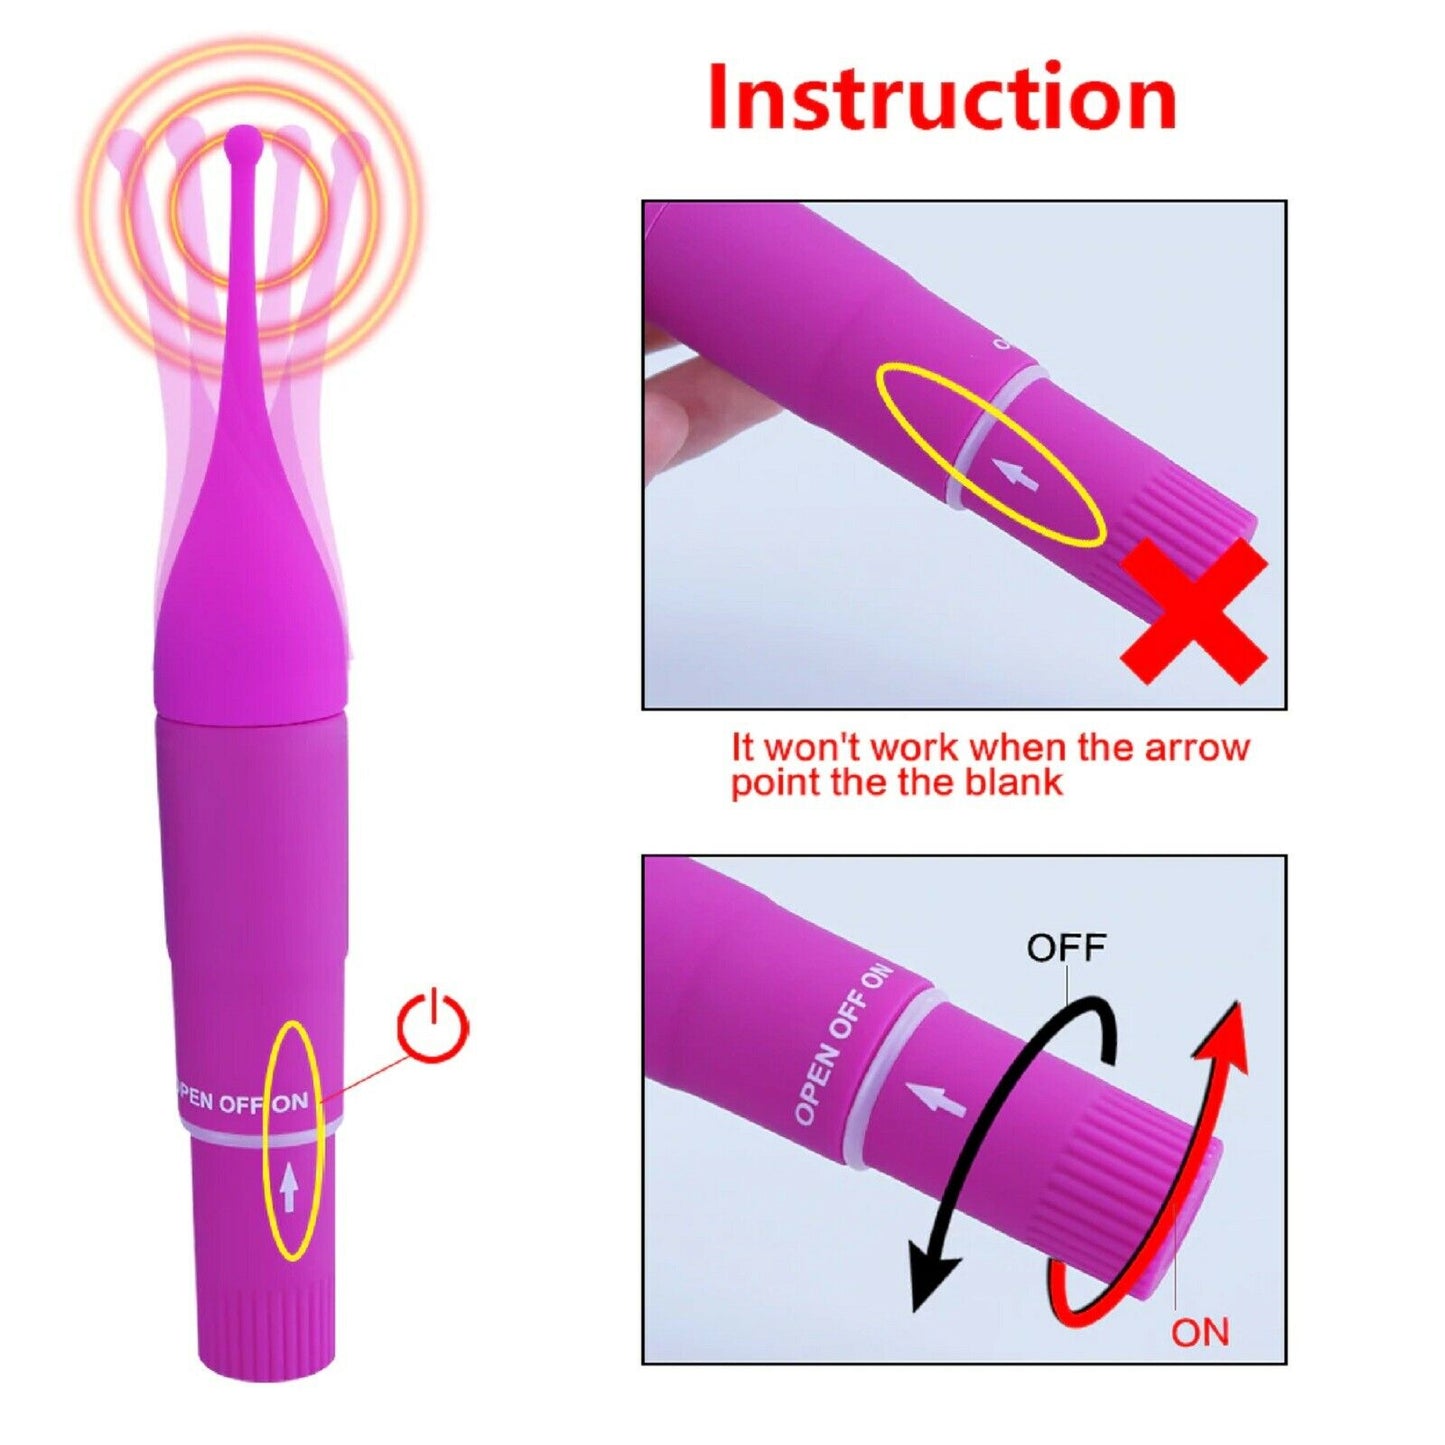 Wand Rabbit Vibrator Clitoral Stimulator Clit G Spot Bullet Dildo Sex Toy New